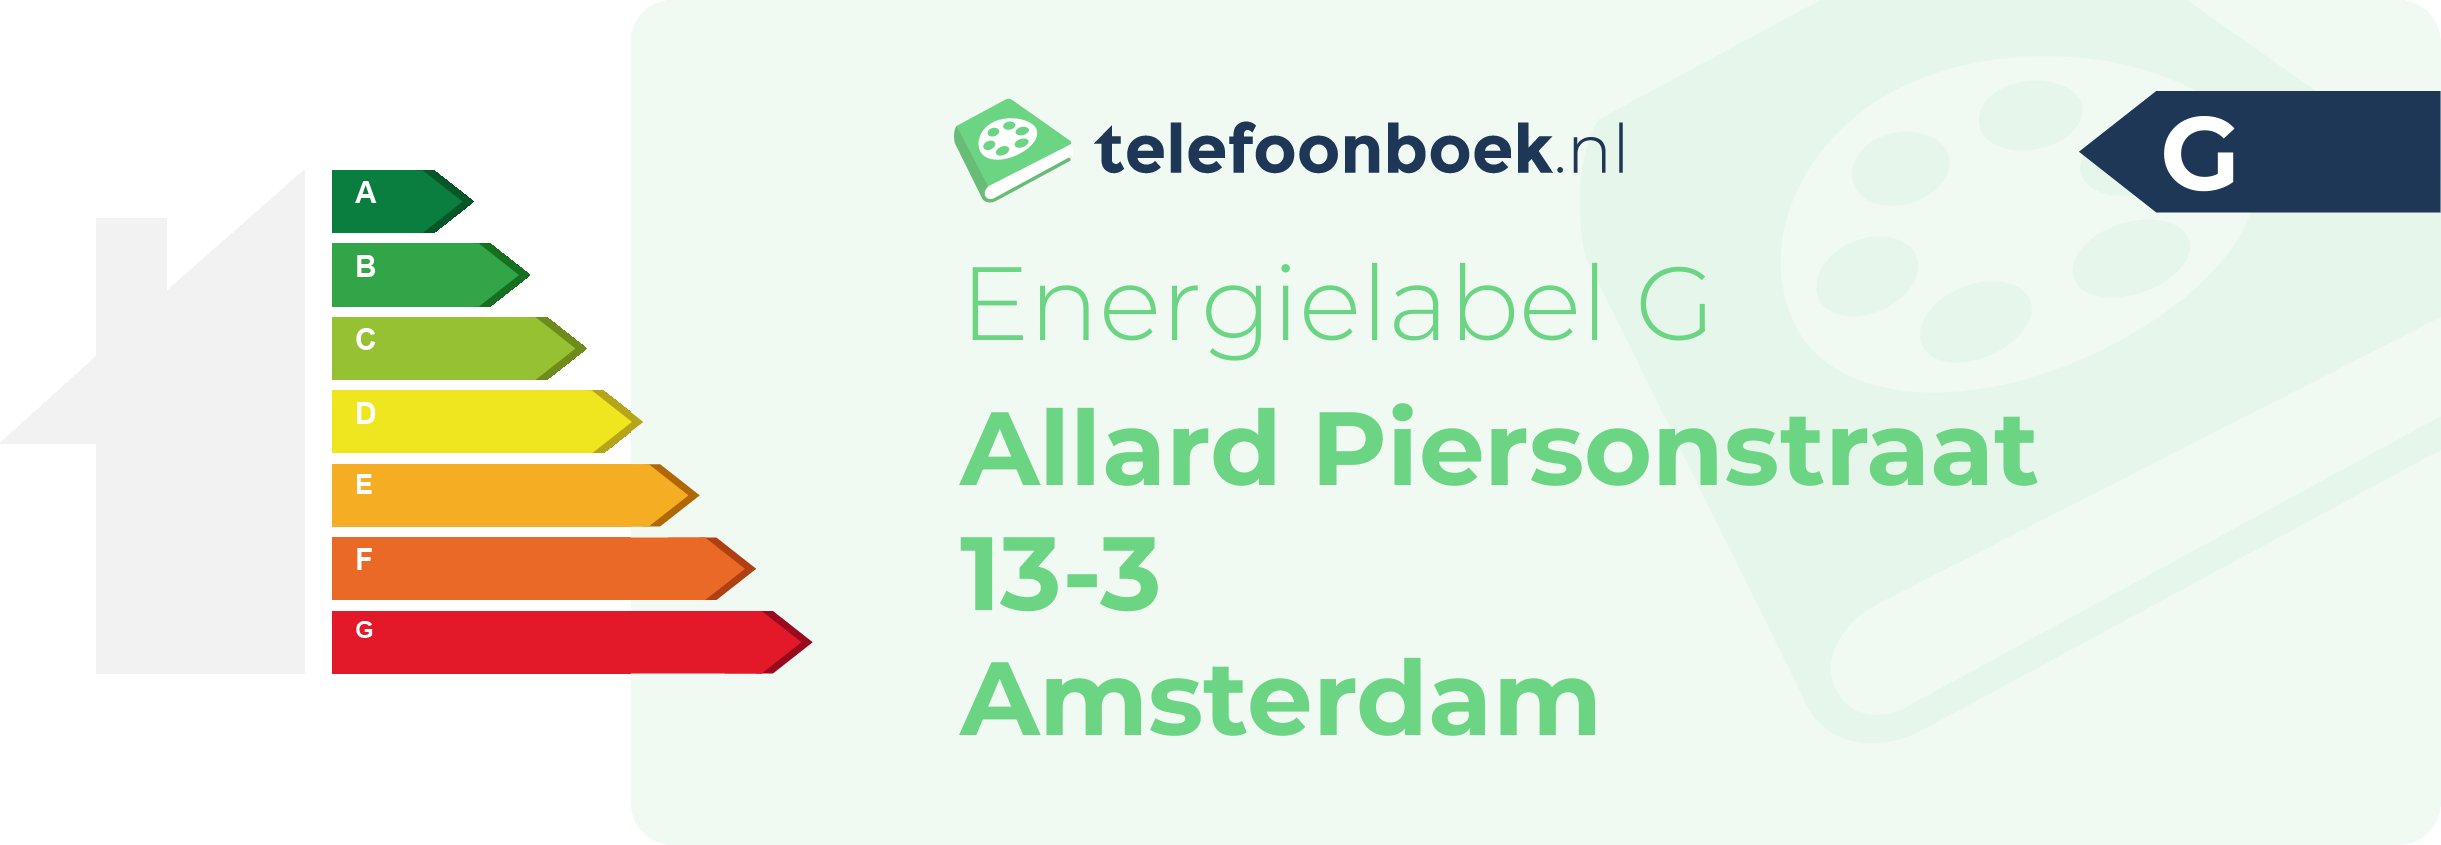 Energielabel Allard Piersonstraat 13-3 Amsterdam